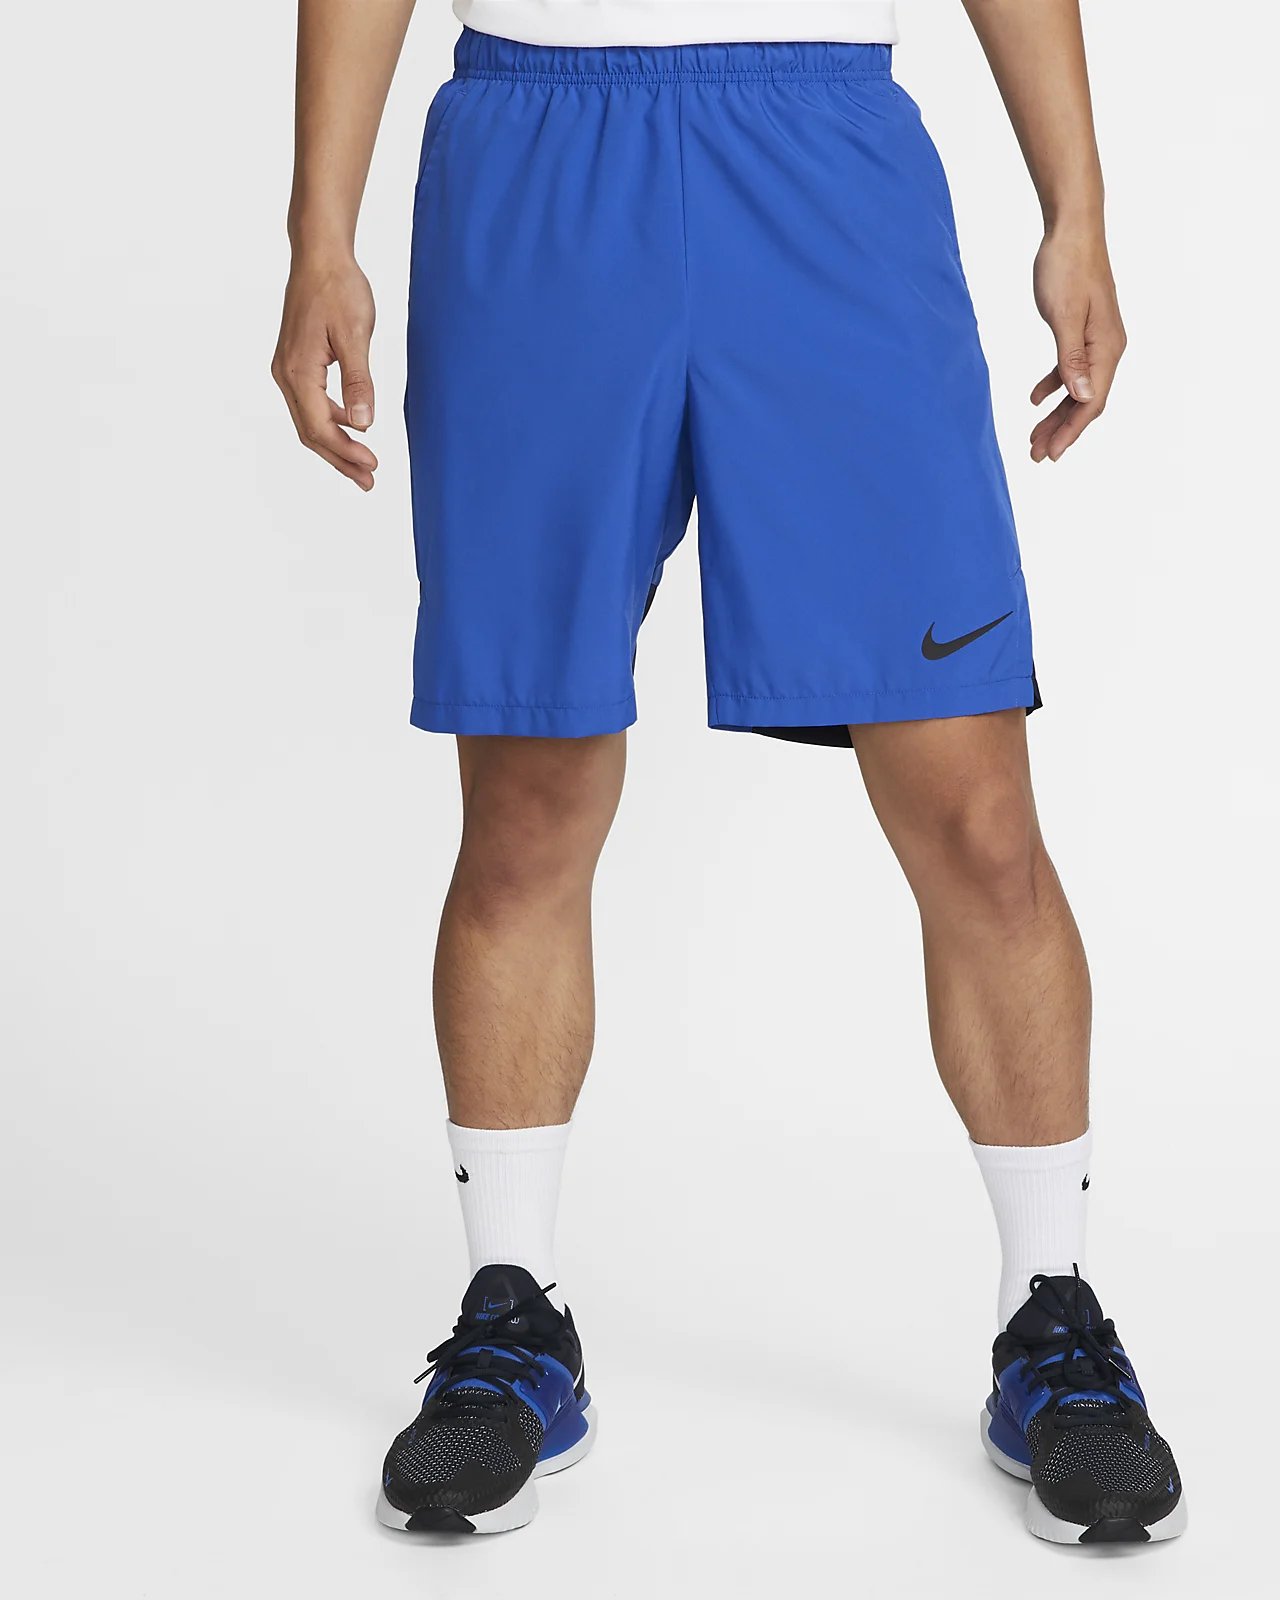 14 Amazing Nike Dri-Fit Shorts For 2023